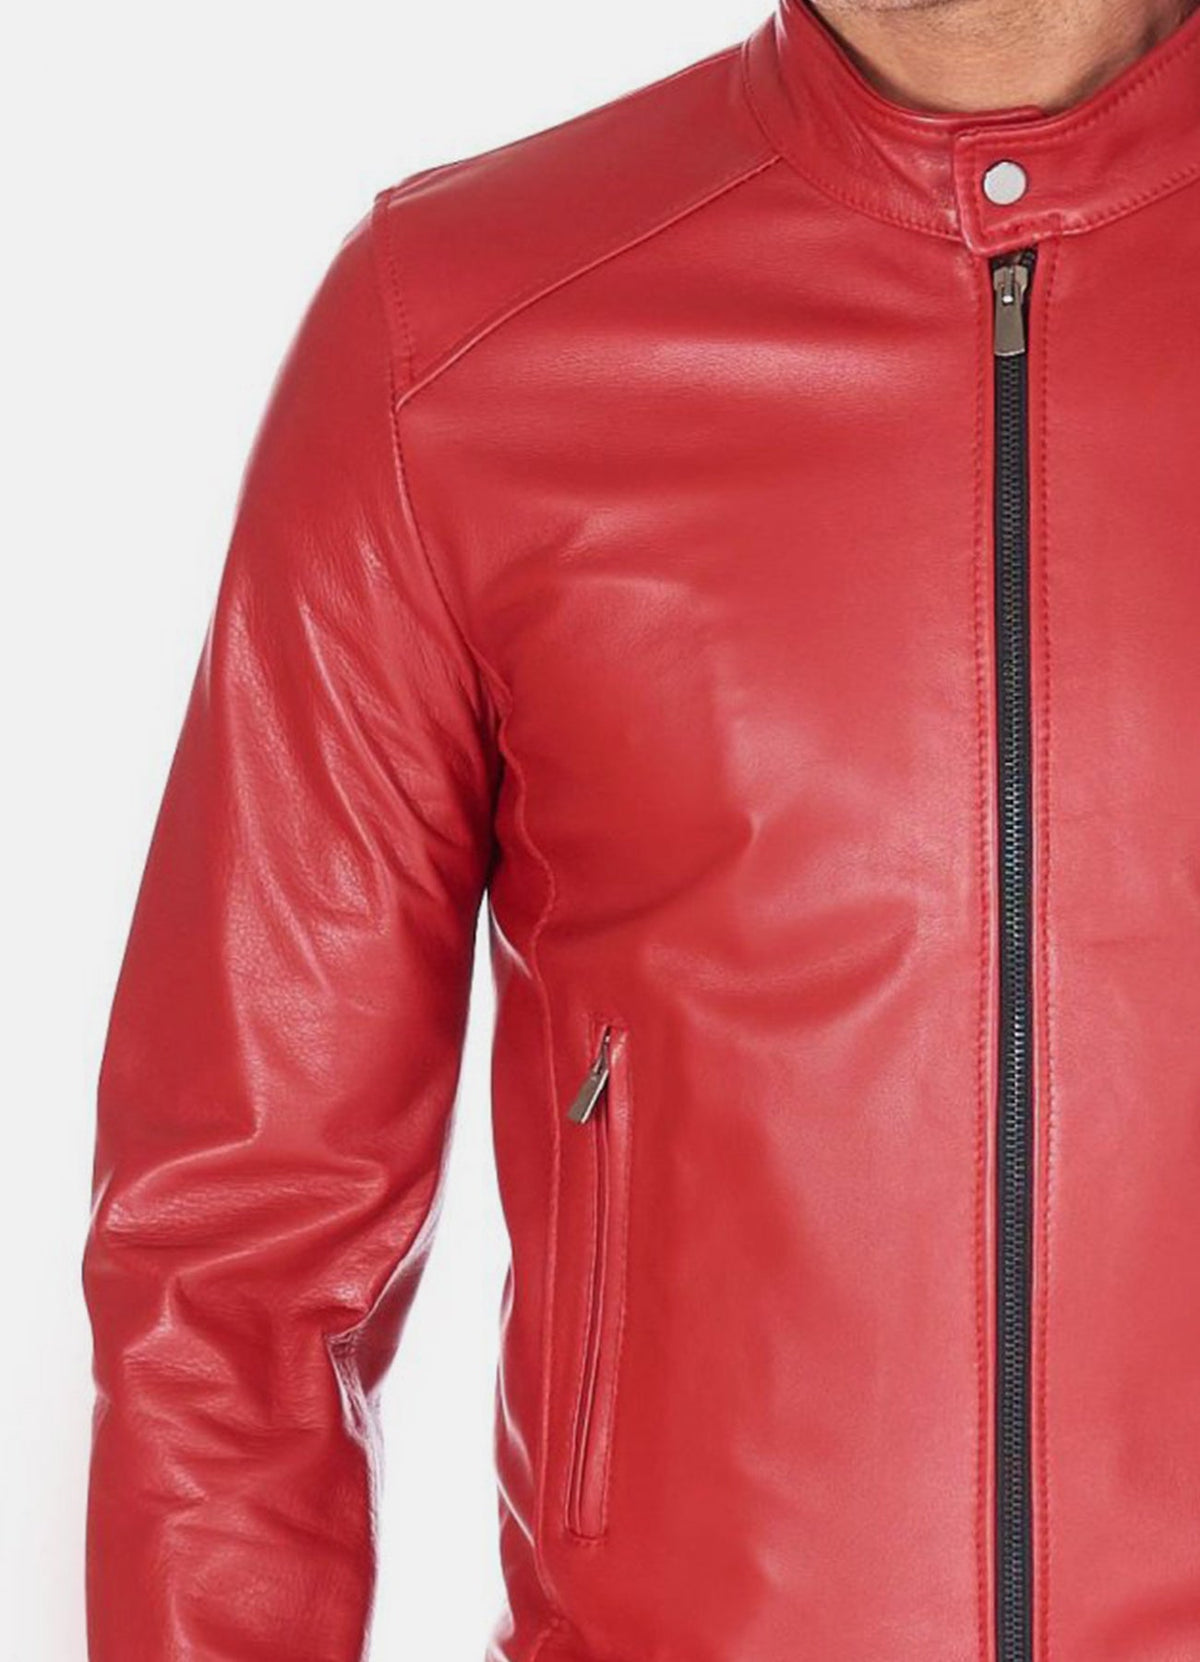 Mens Premium Red Biker Leather Jacket